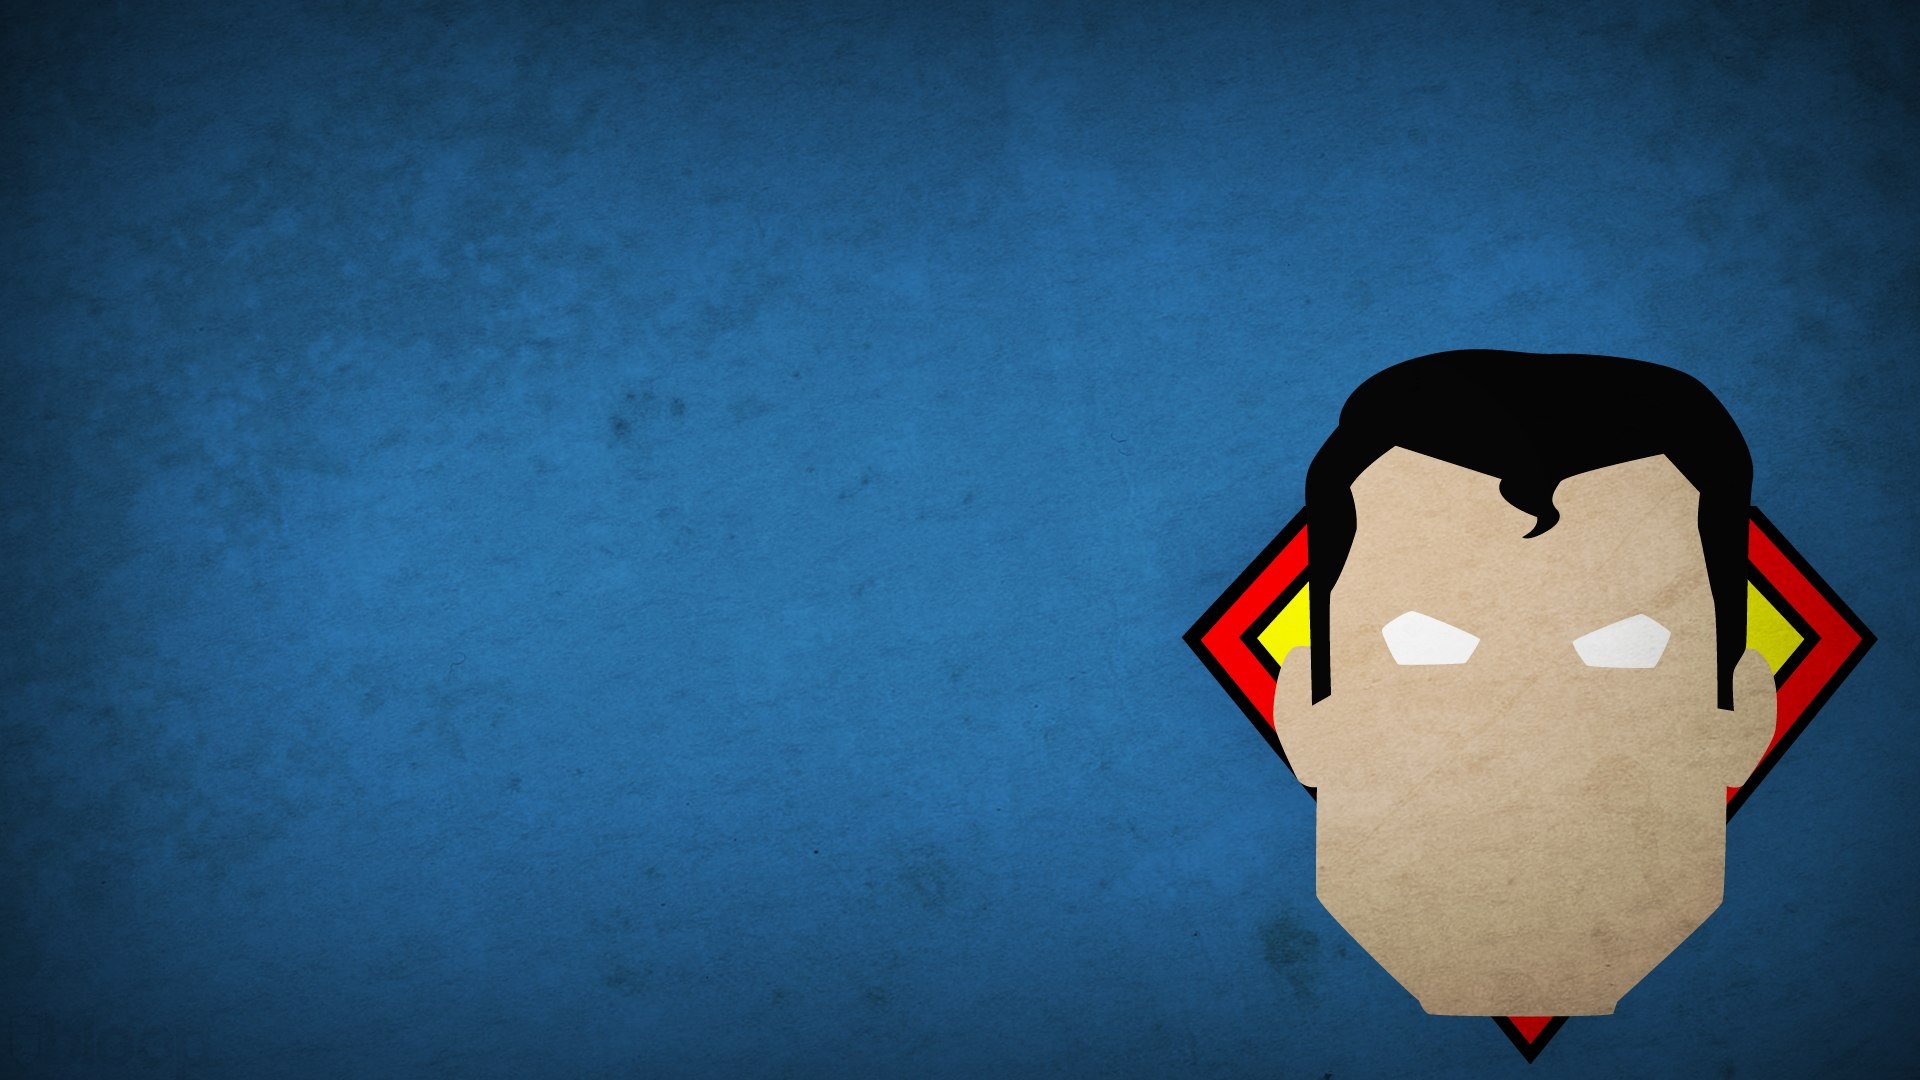 General 1920x1080 Superman minimalism Blo0p blue background superhero DC Comics face Clark Kent